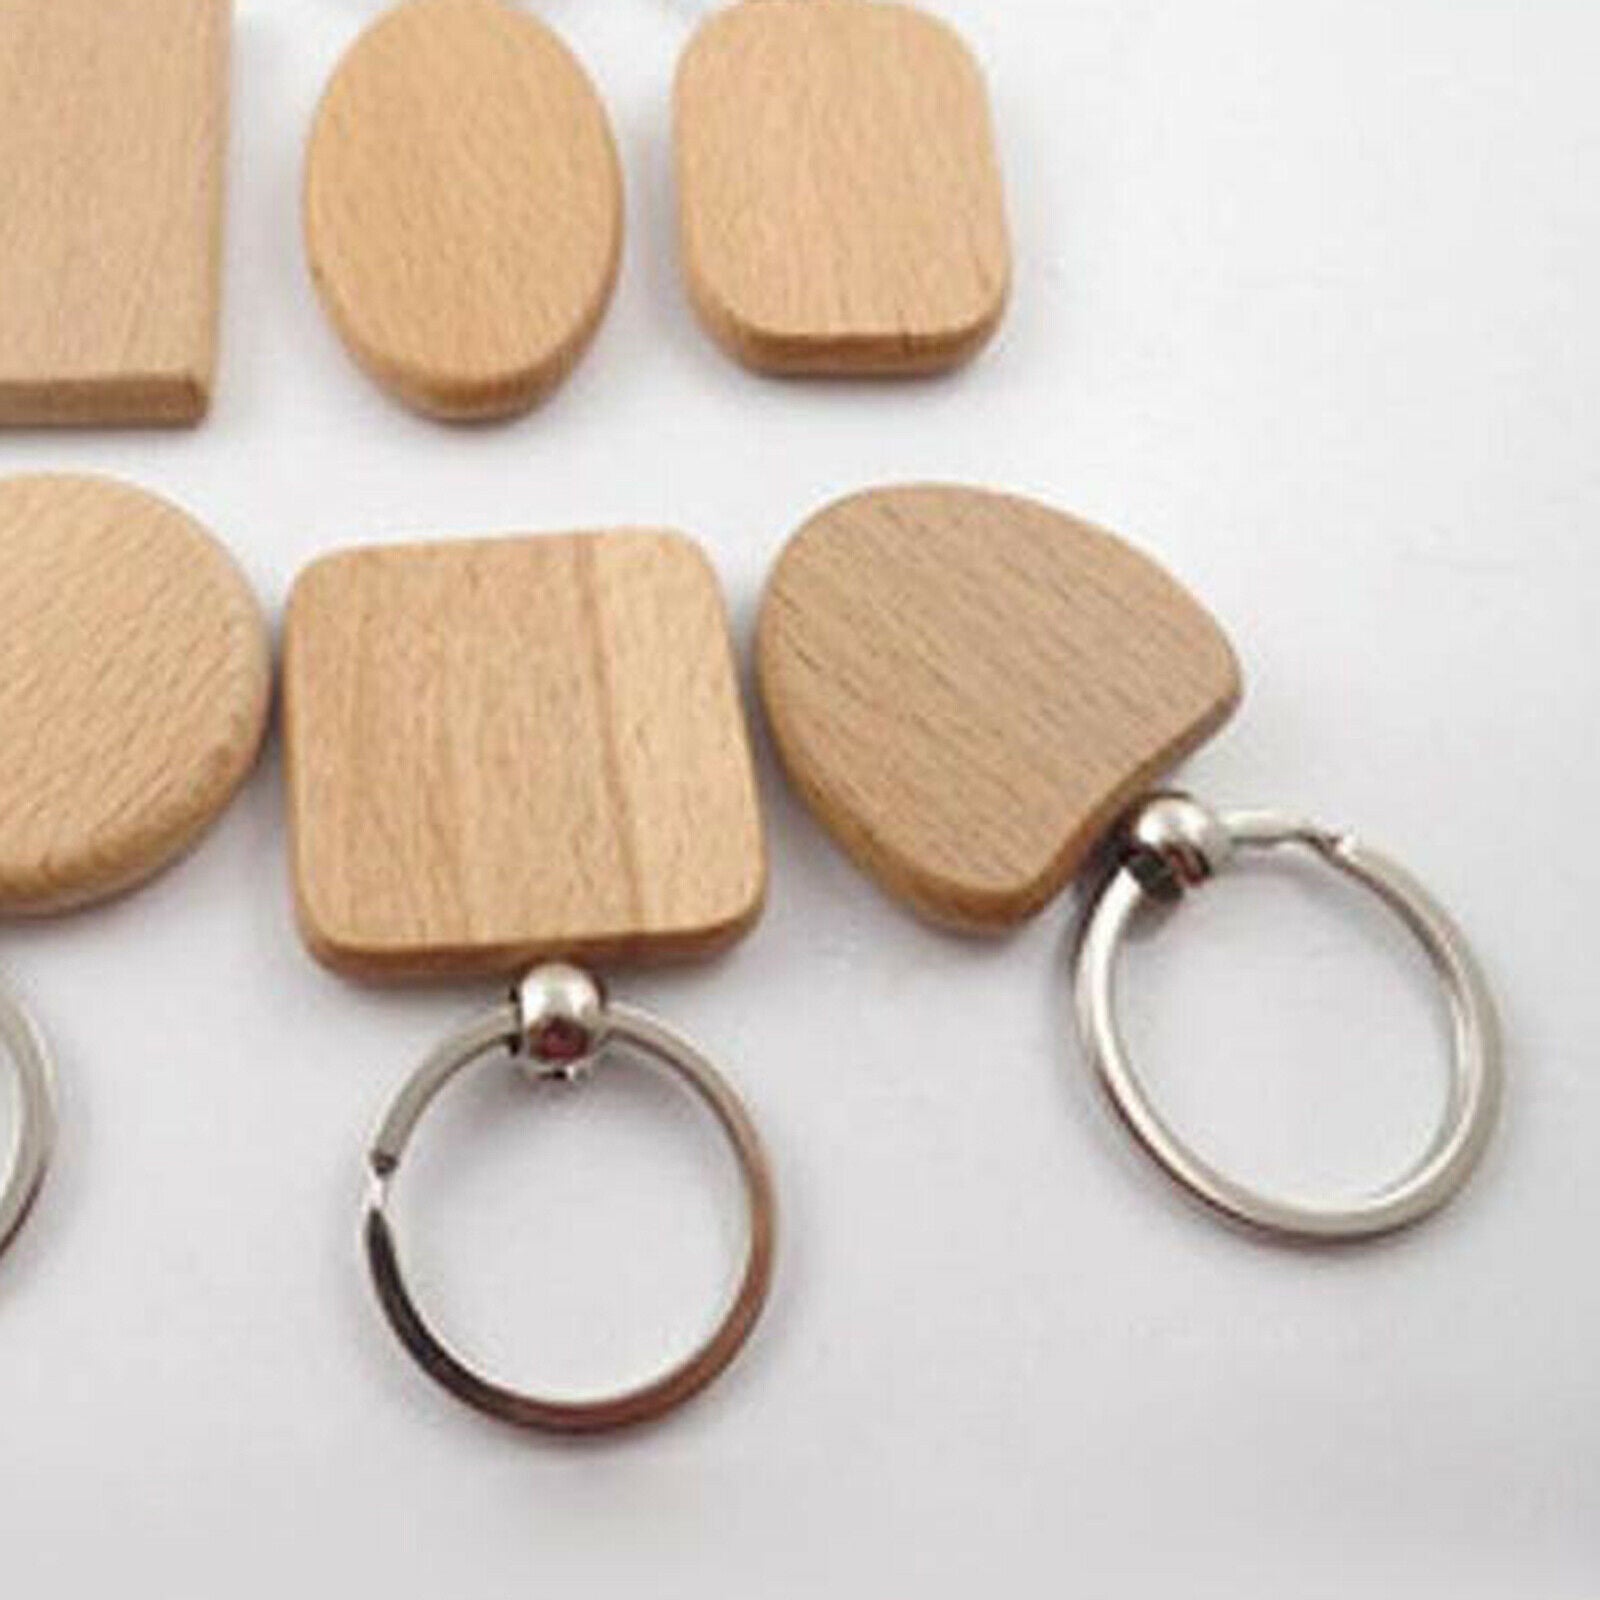 Pack of 25 Blank Plain Wooden Key Chain Wood Keychain Car Bag Charm Pendant